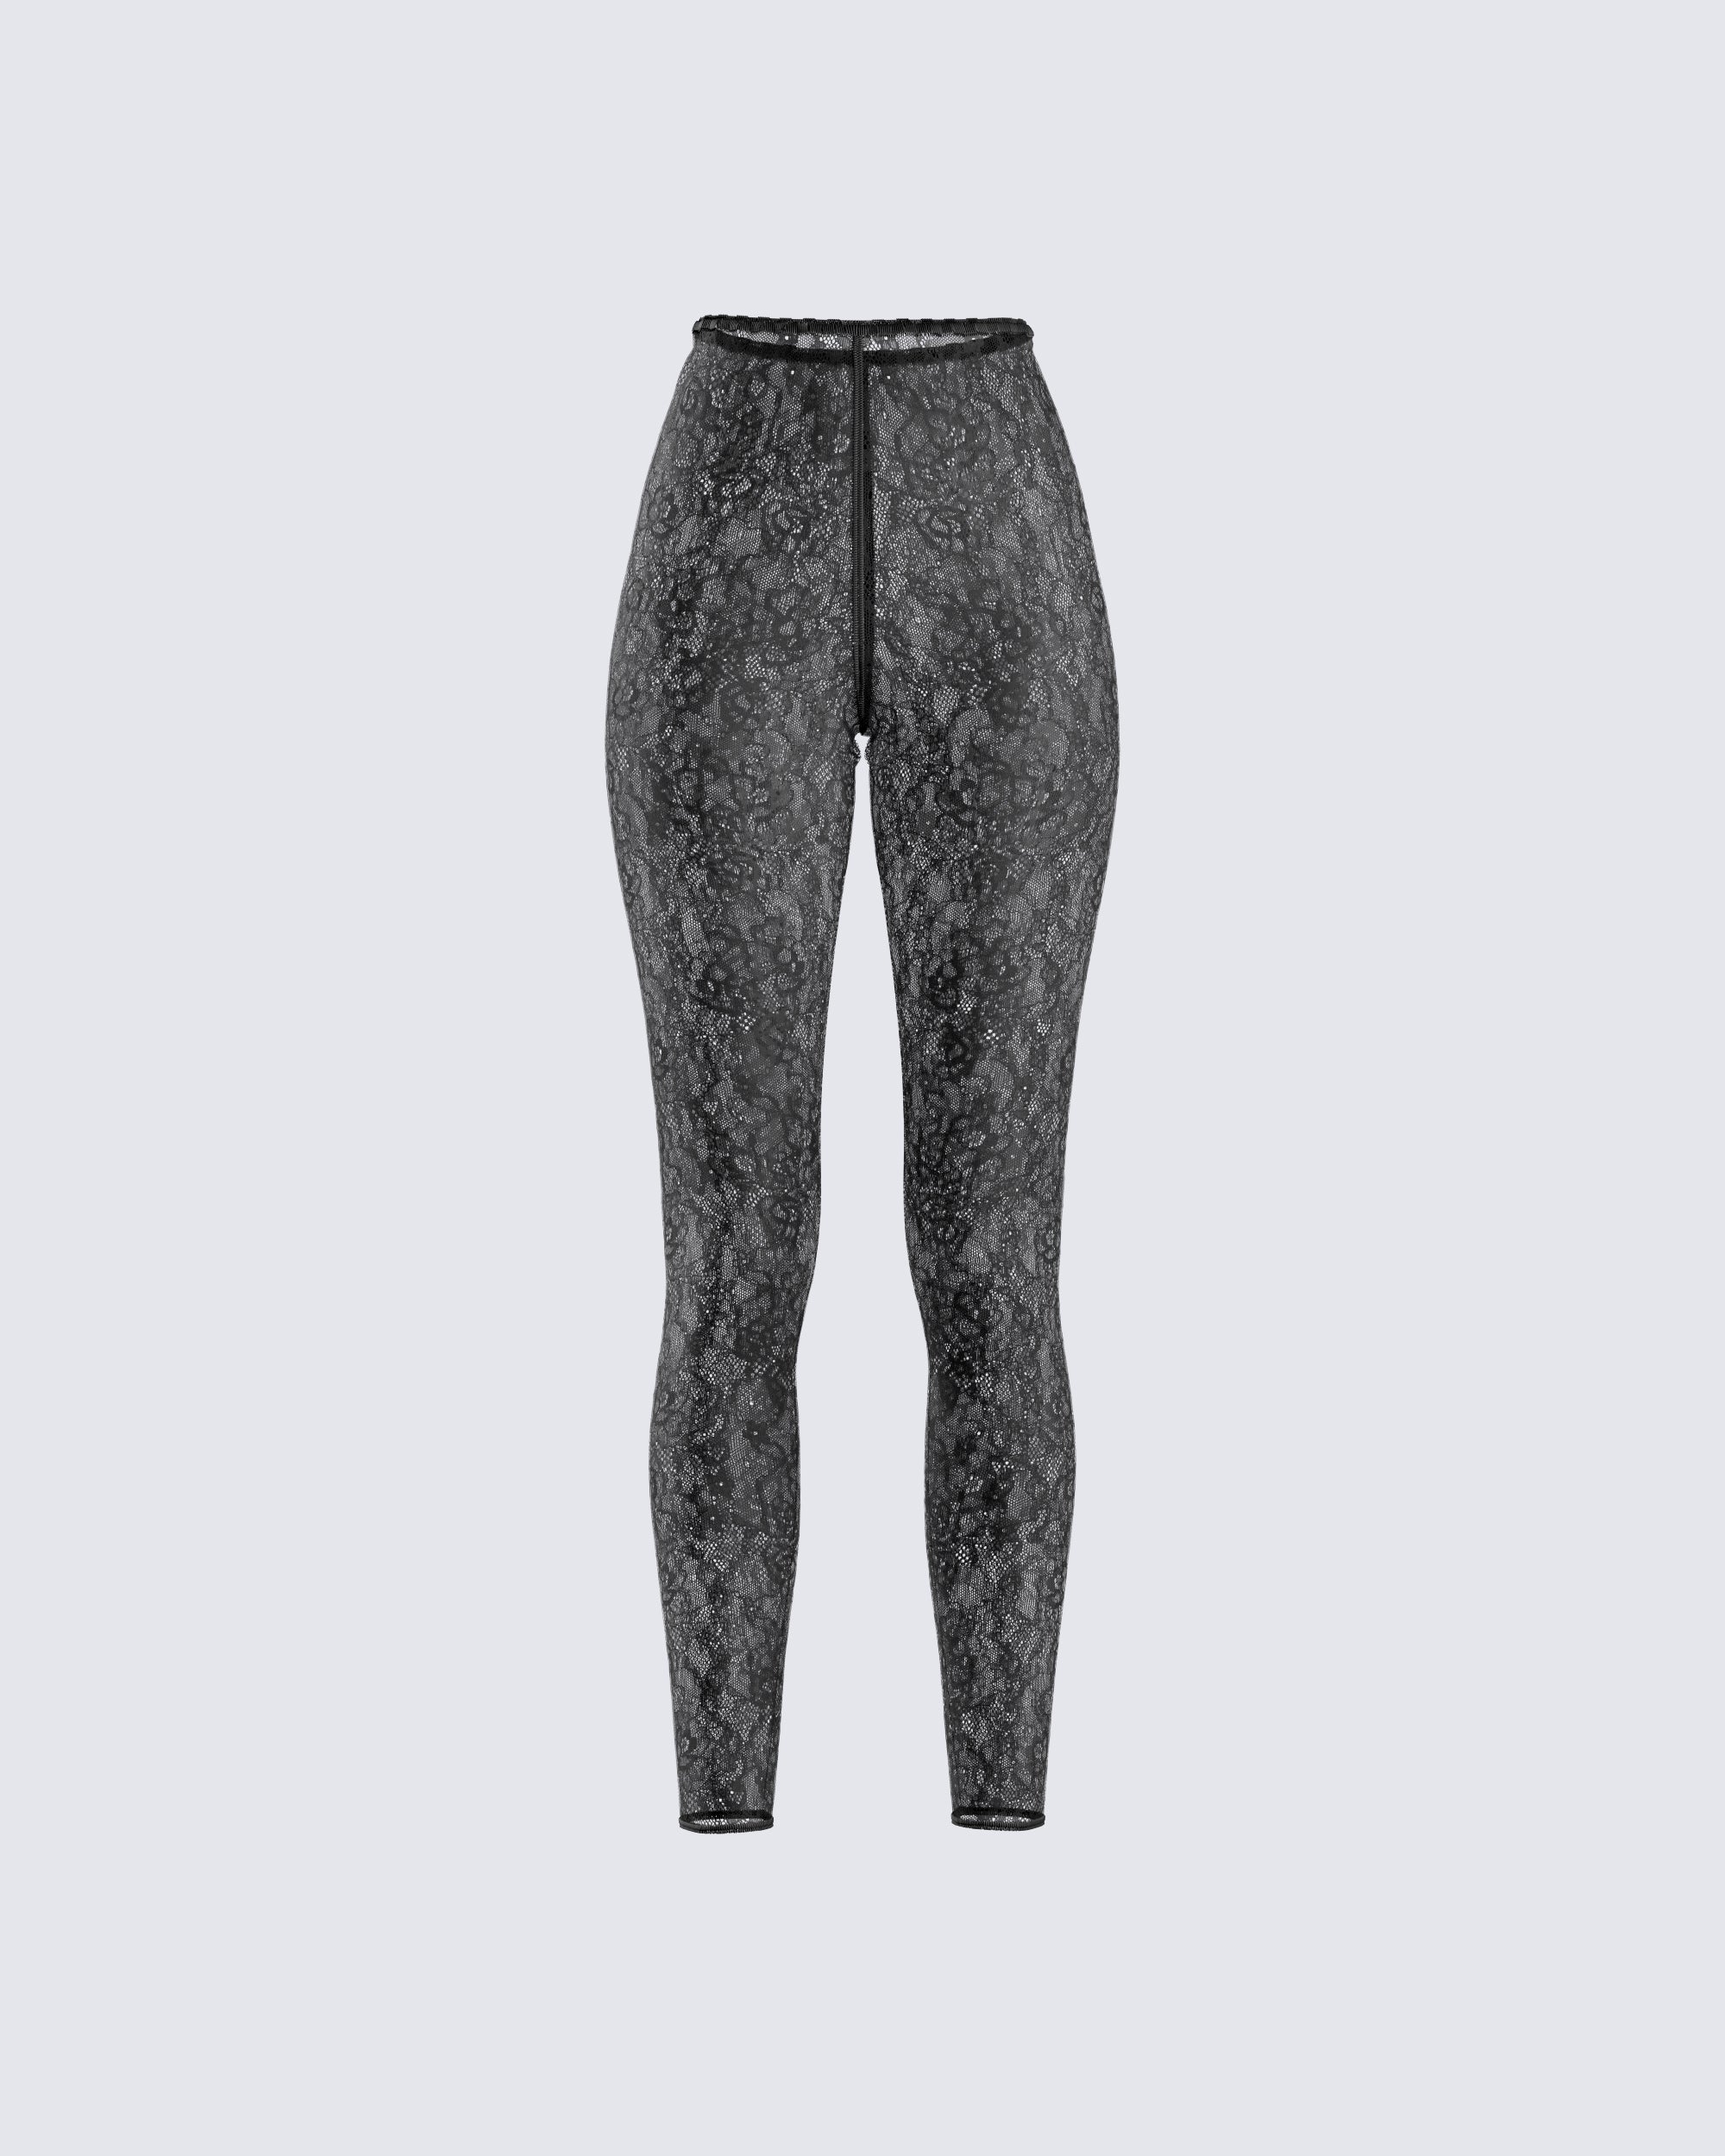 Black Lace Capri Pants – Tillett's